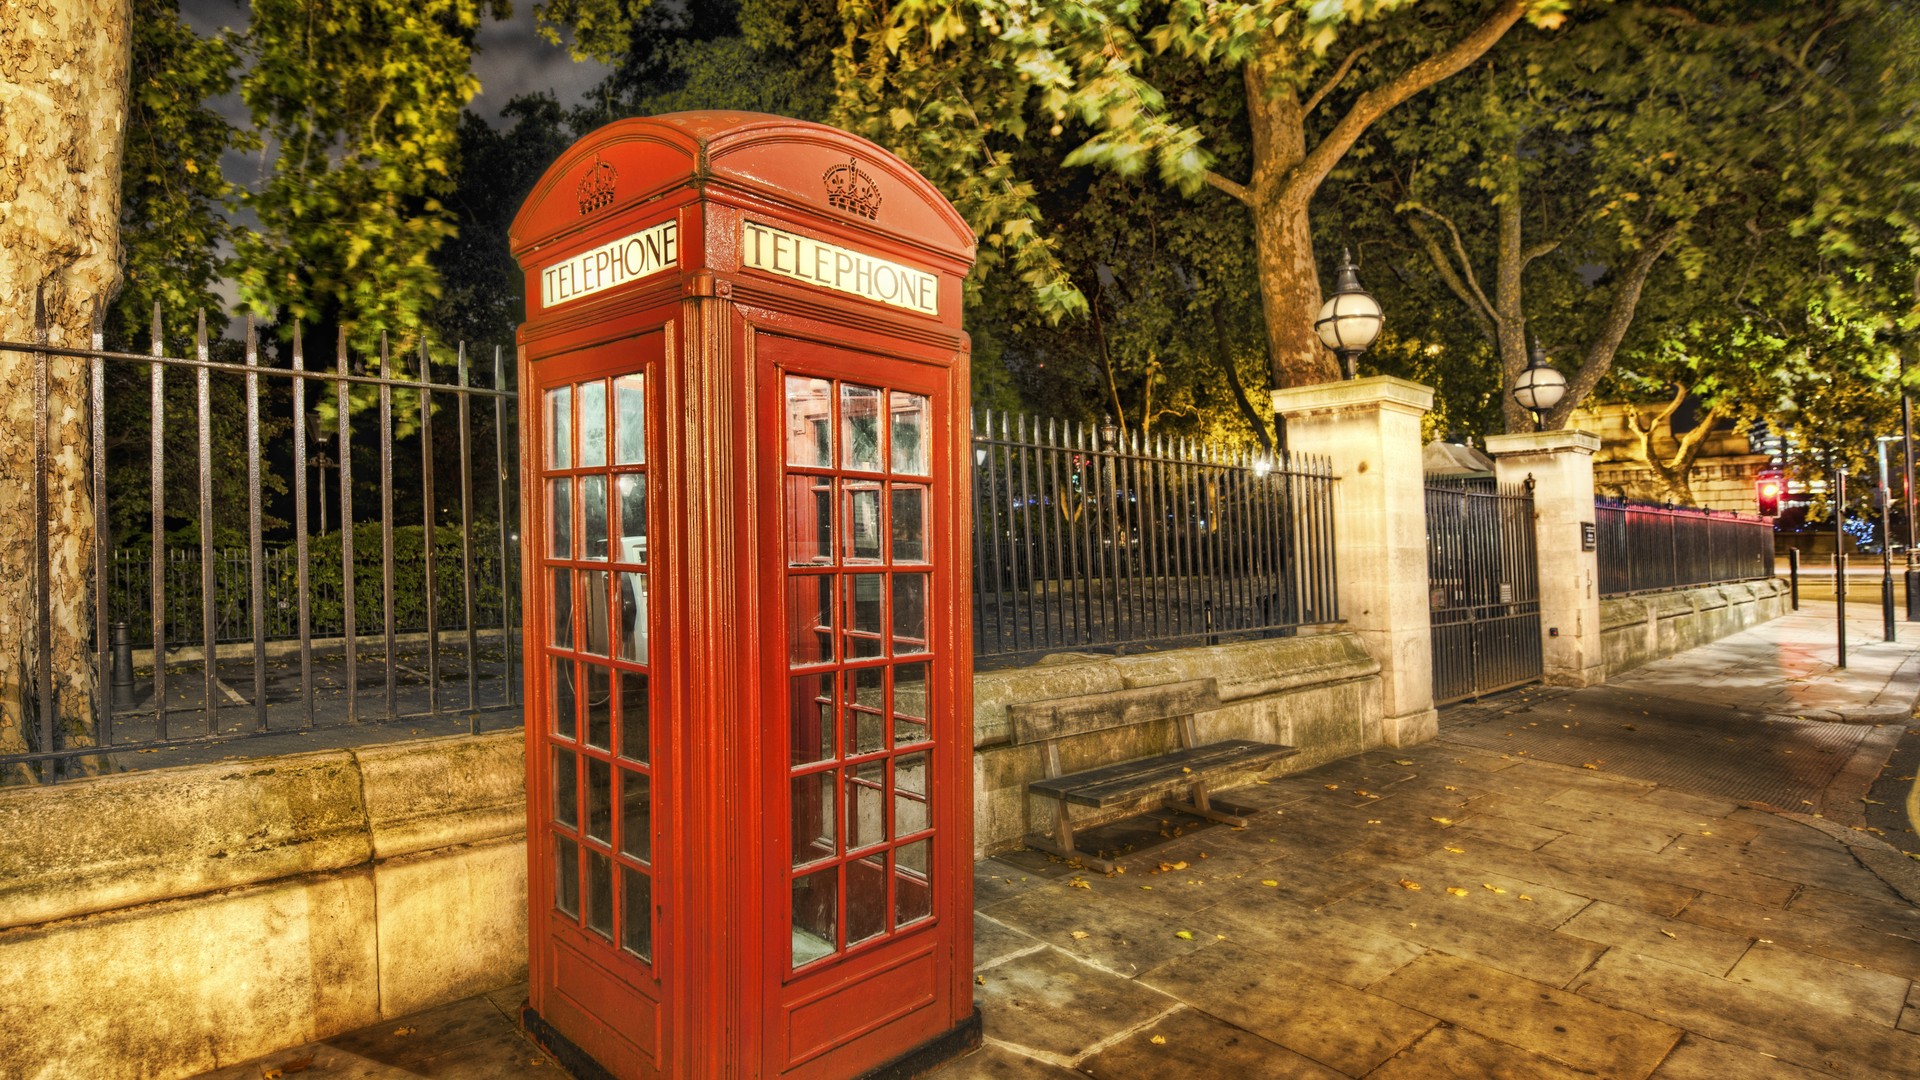 Streets British Wallpaper Telephone